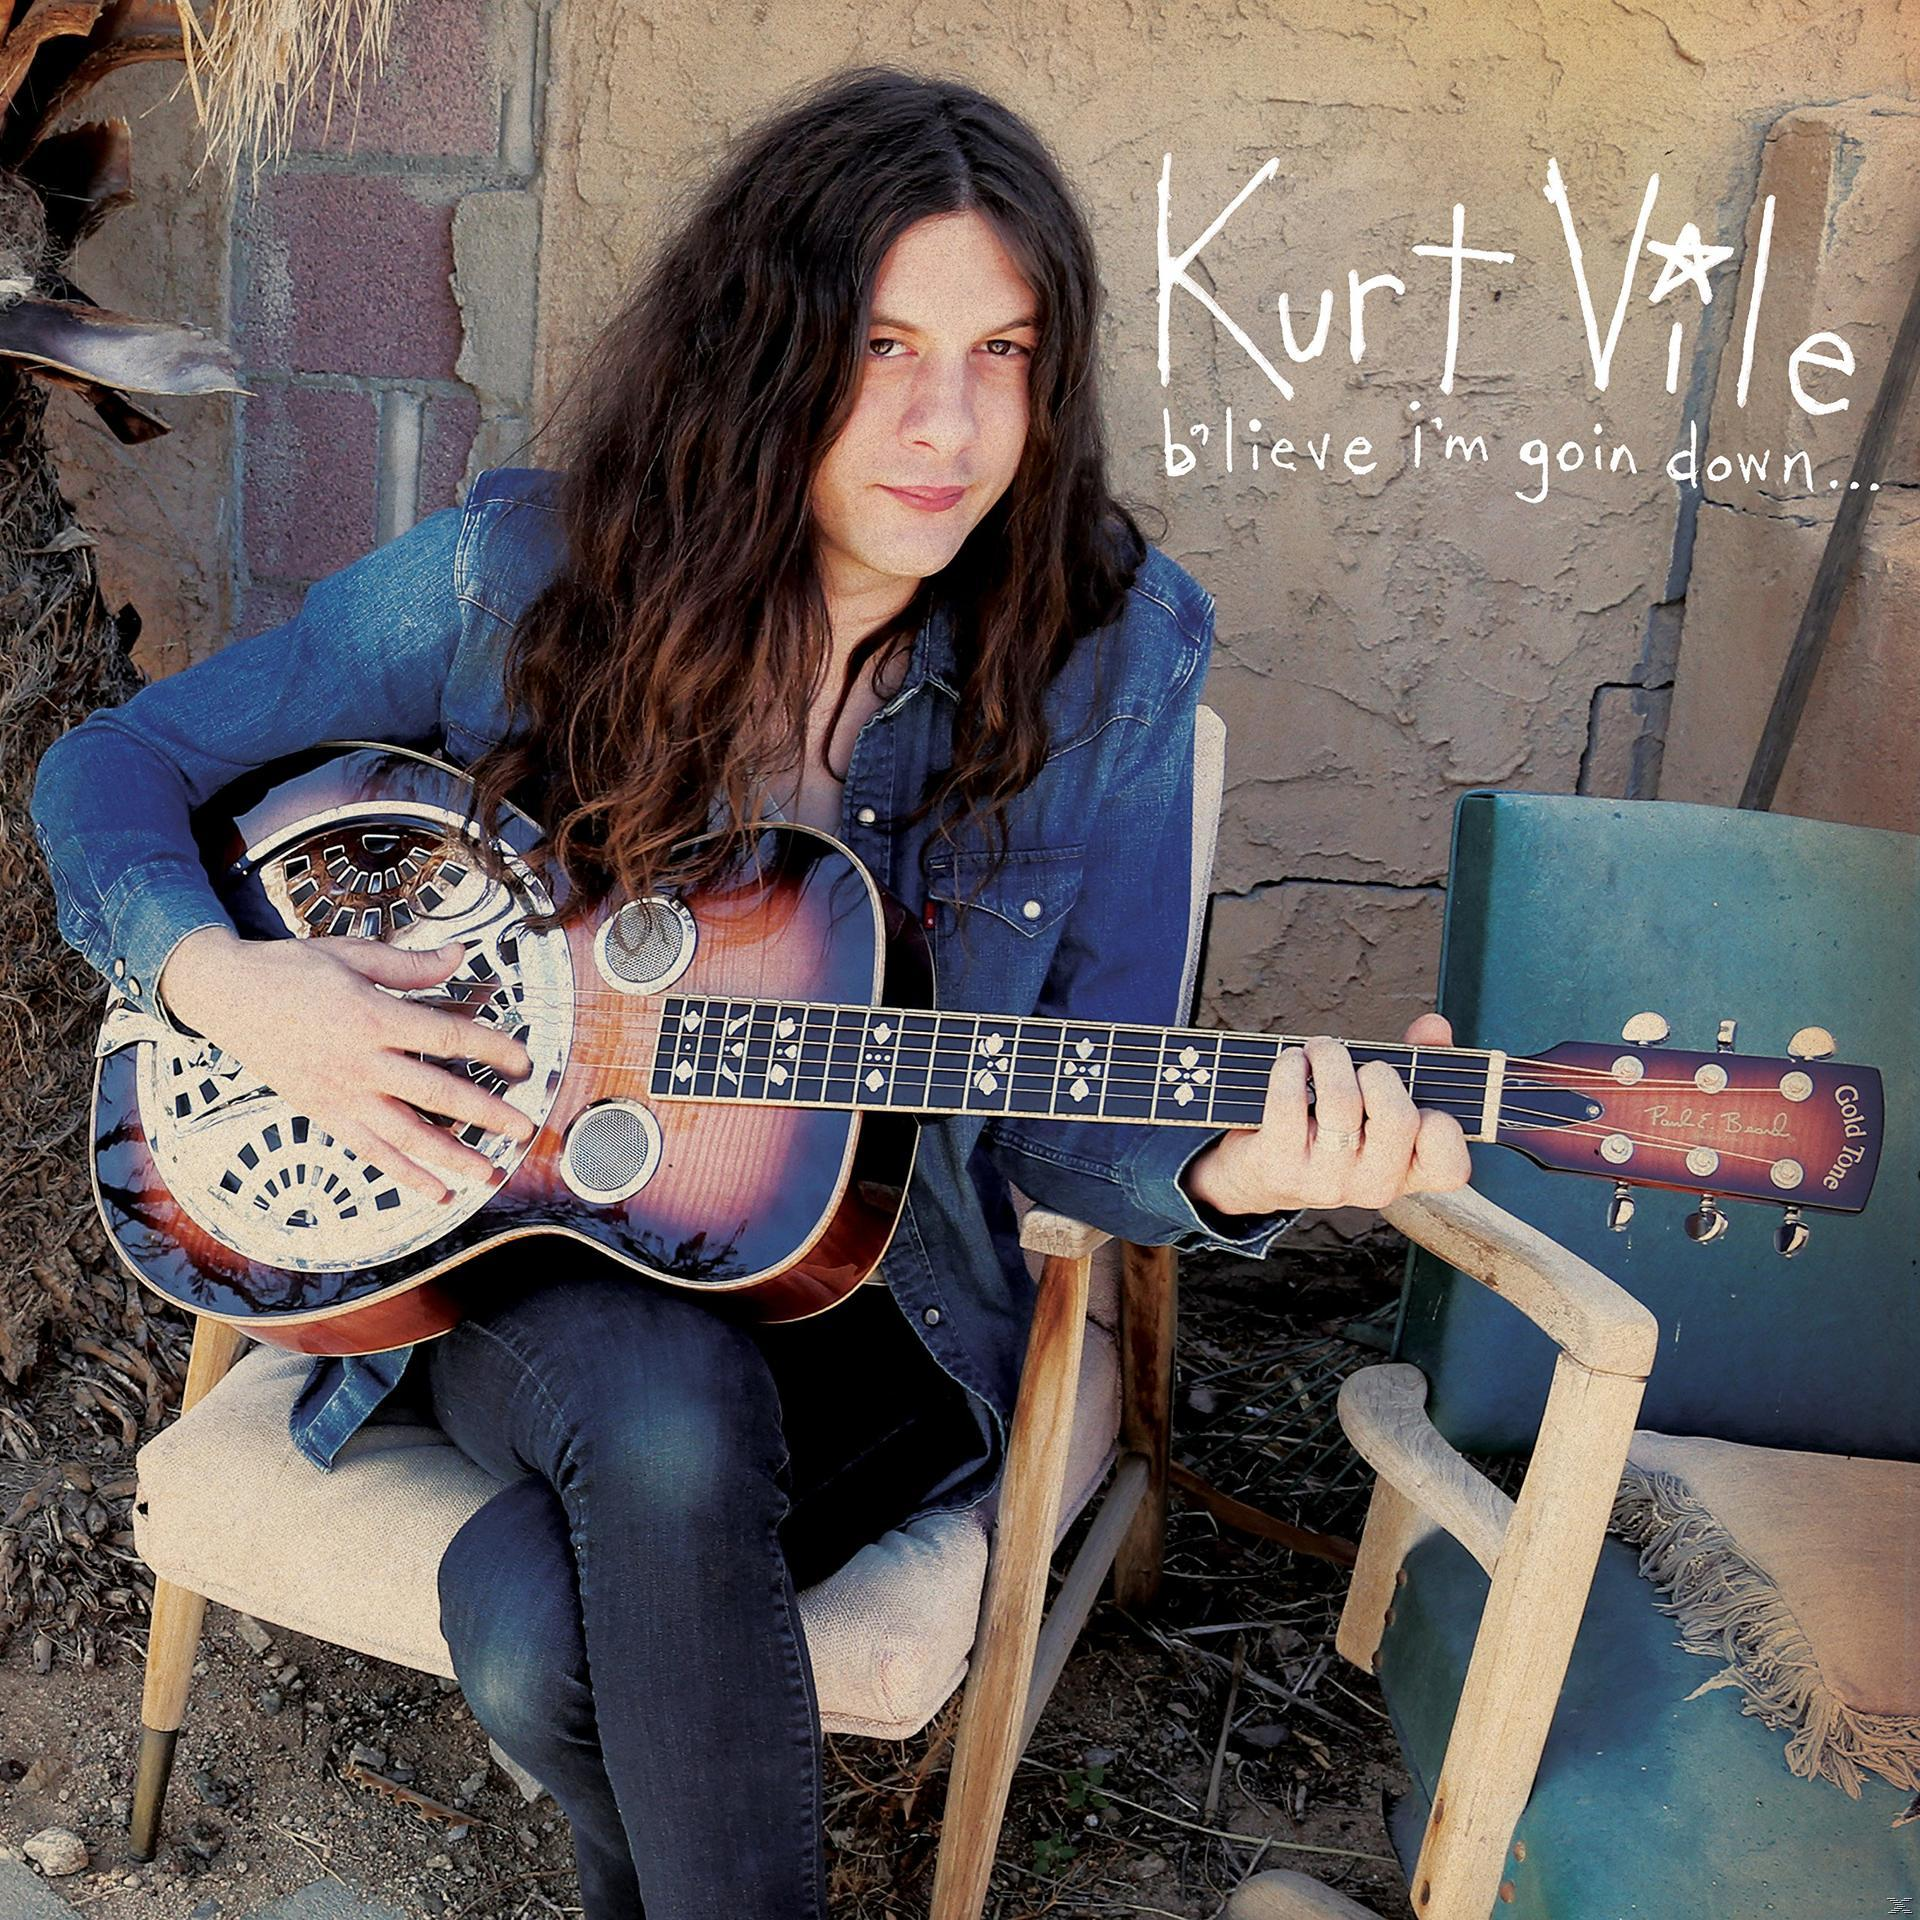 Download) - - Down... + Going Kurt B\'lieve Vile (LP I\'m